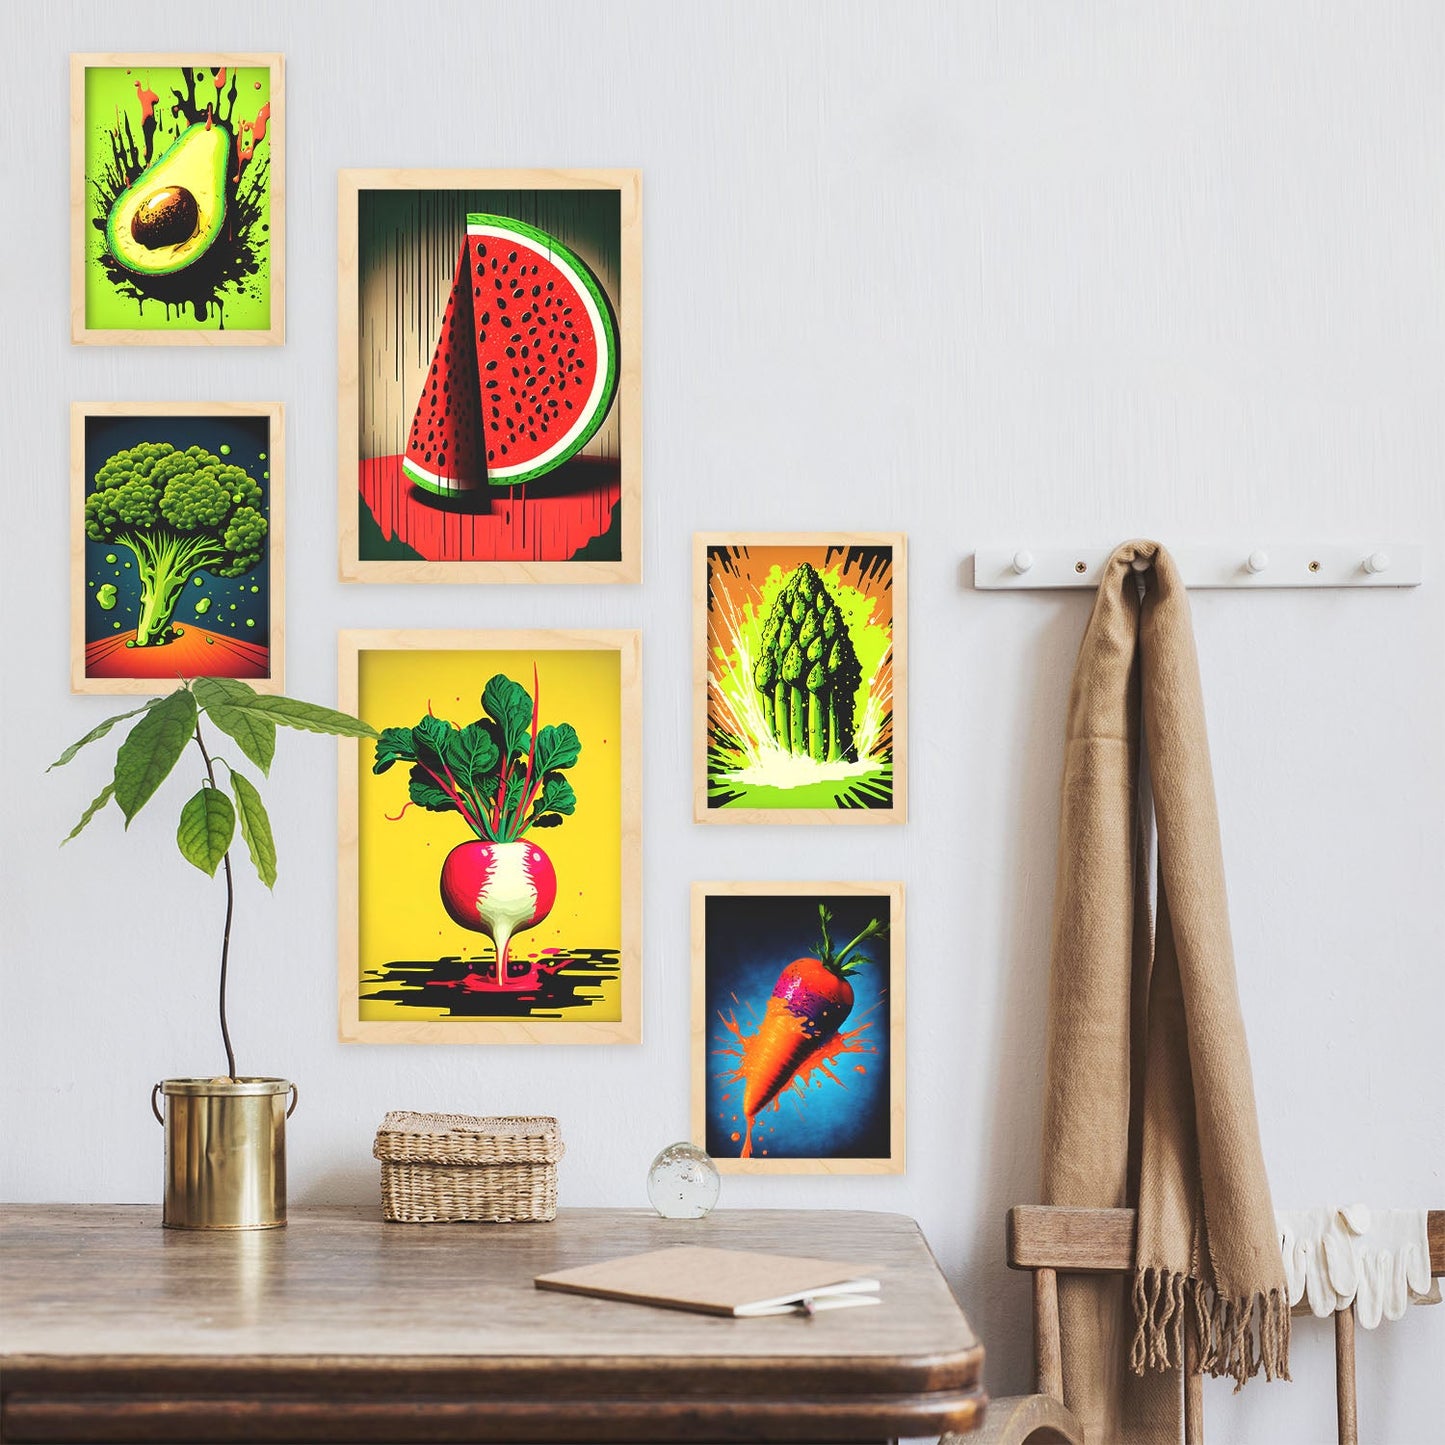 Nacnic Pop Art Vegtables Set_1. Aesthetic Wall Art Prints for Bedroom or Living Room Design.